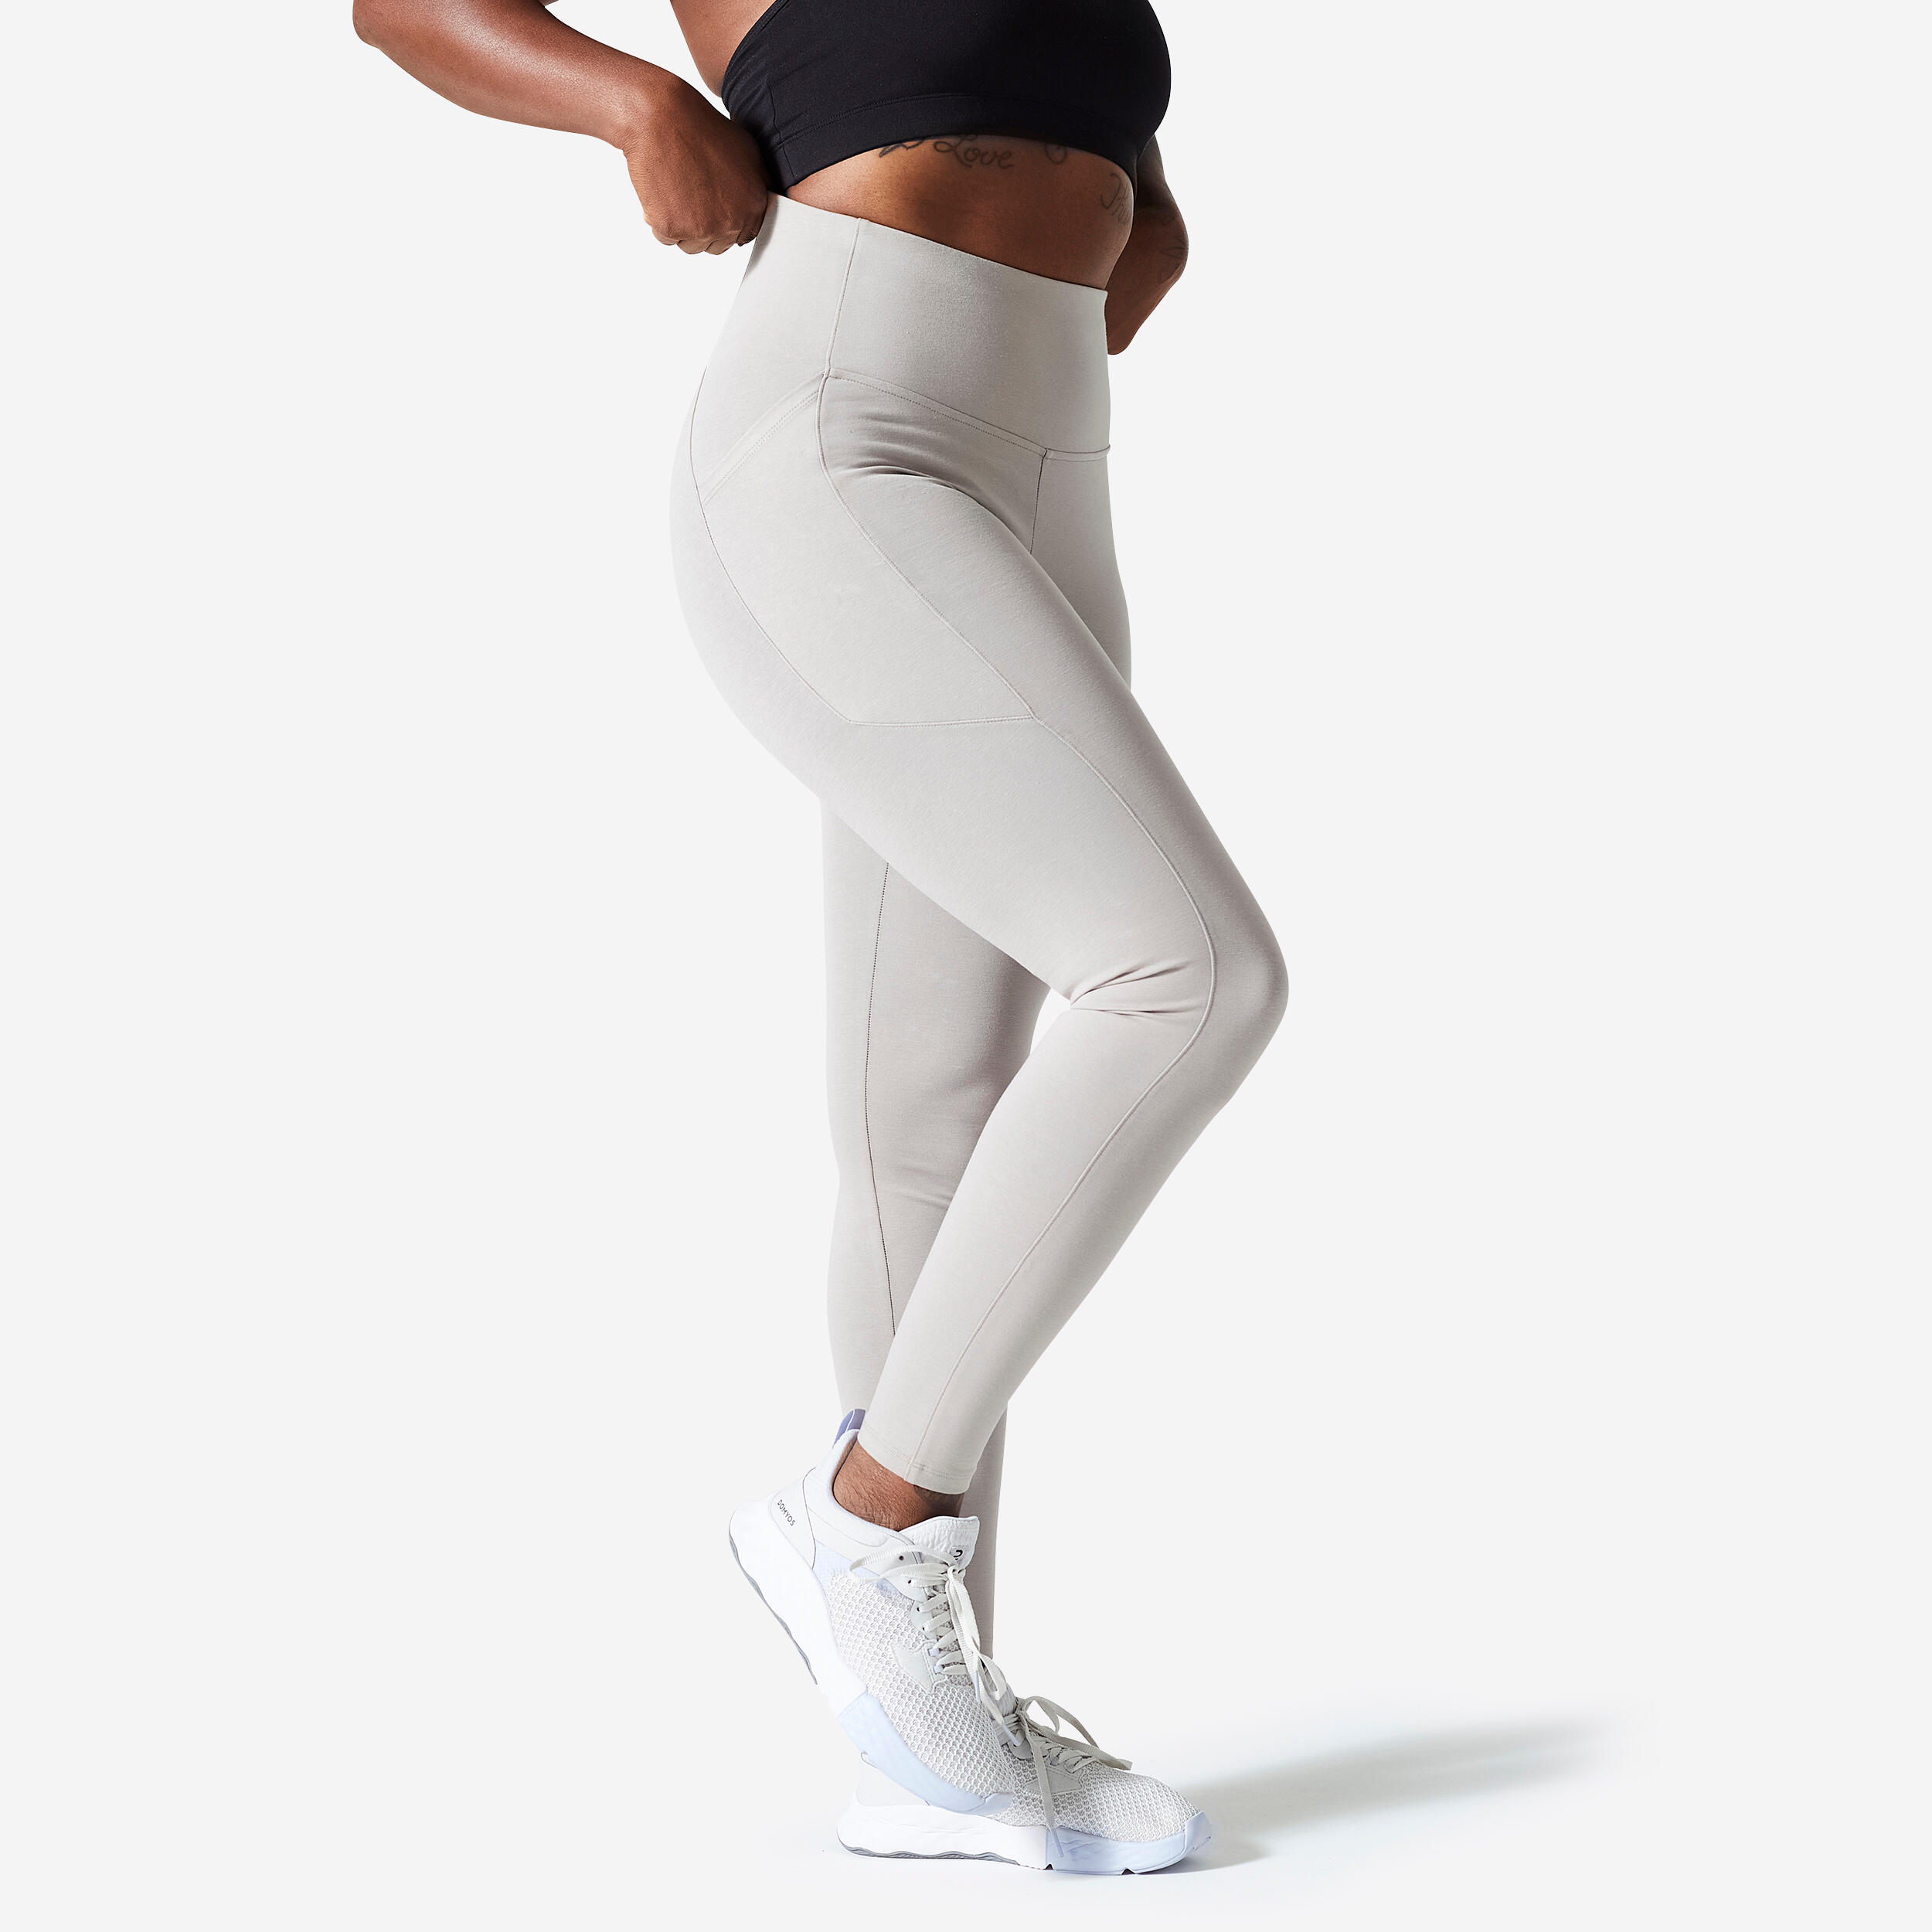 KIMJALY by Decathlon Slim Fit Women Black, Grey Trousers - Buy